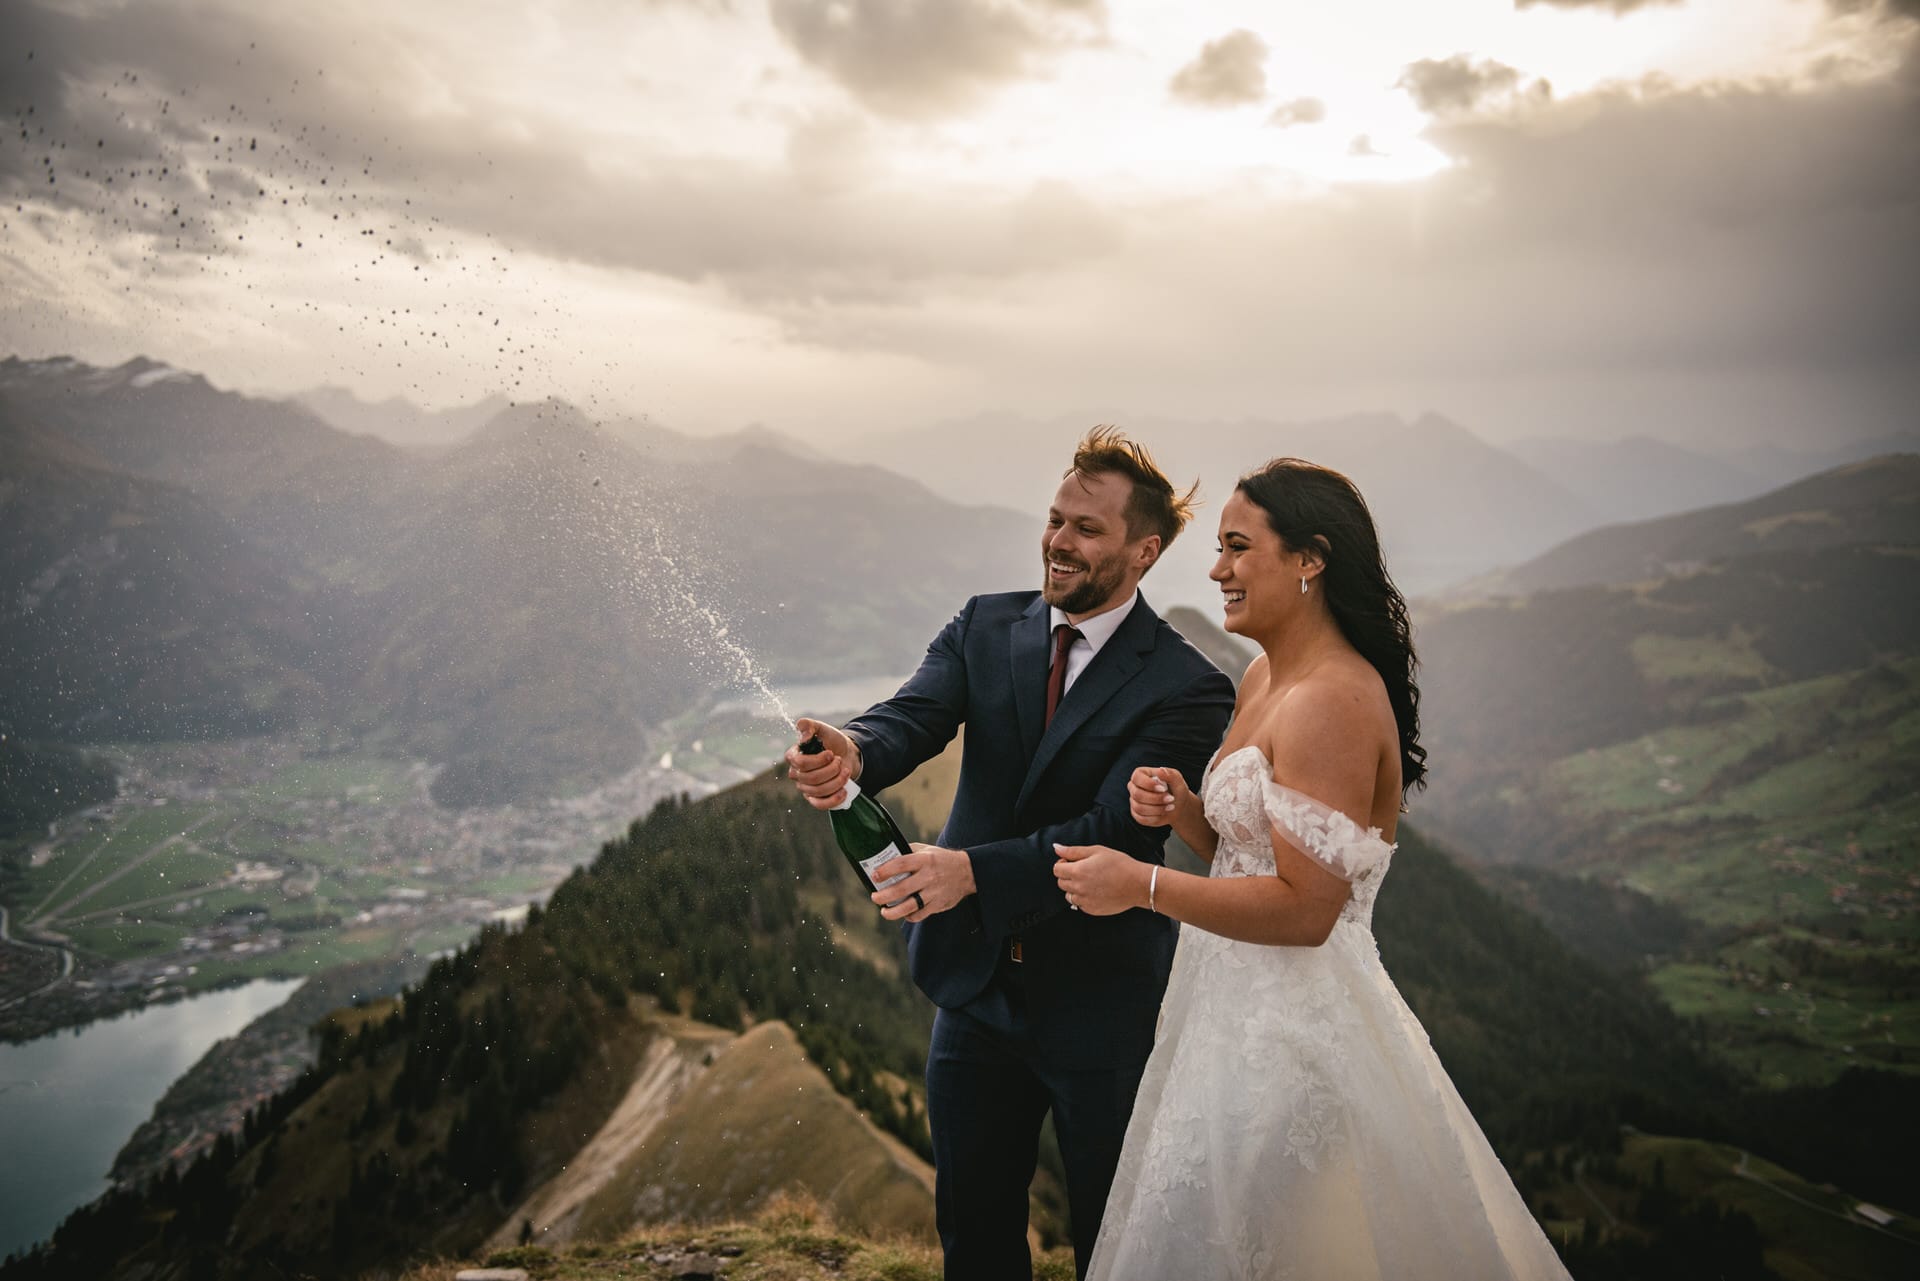 Couple on their elopement day in the Interlaken region of Switzerland - popping champagne